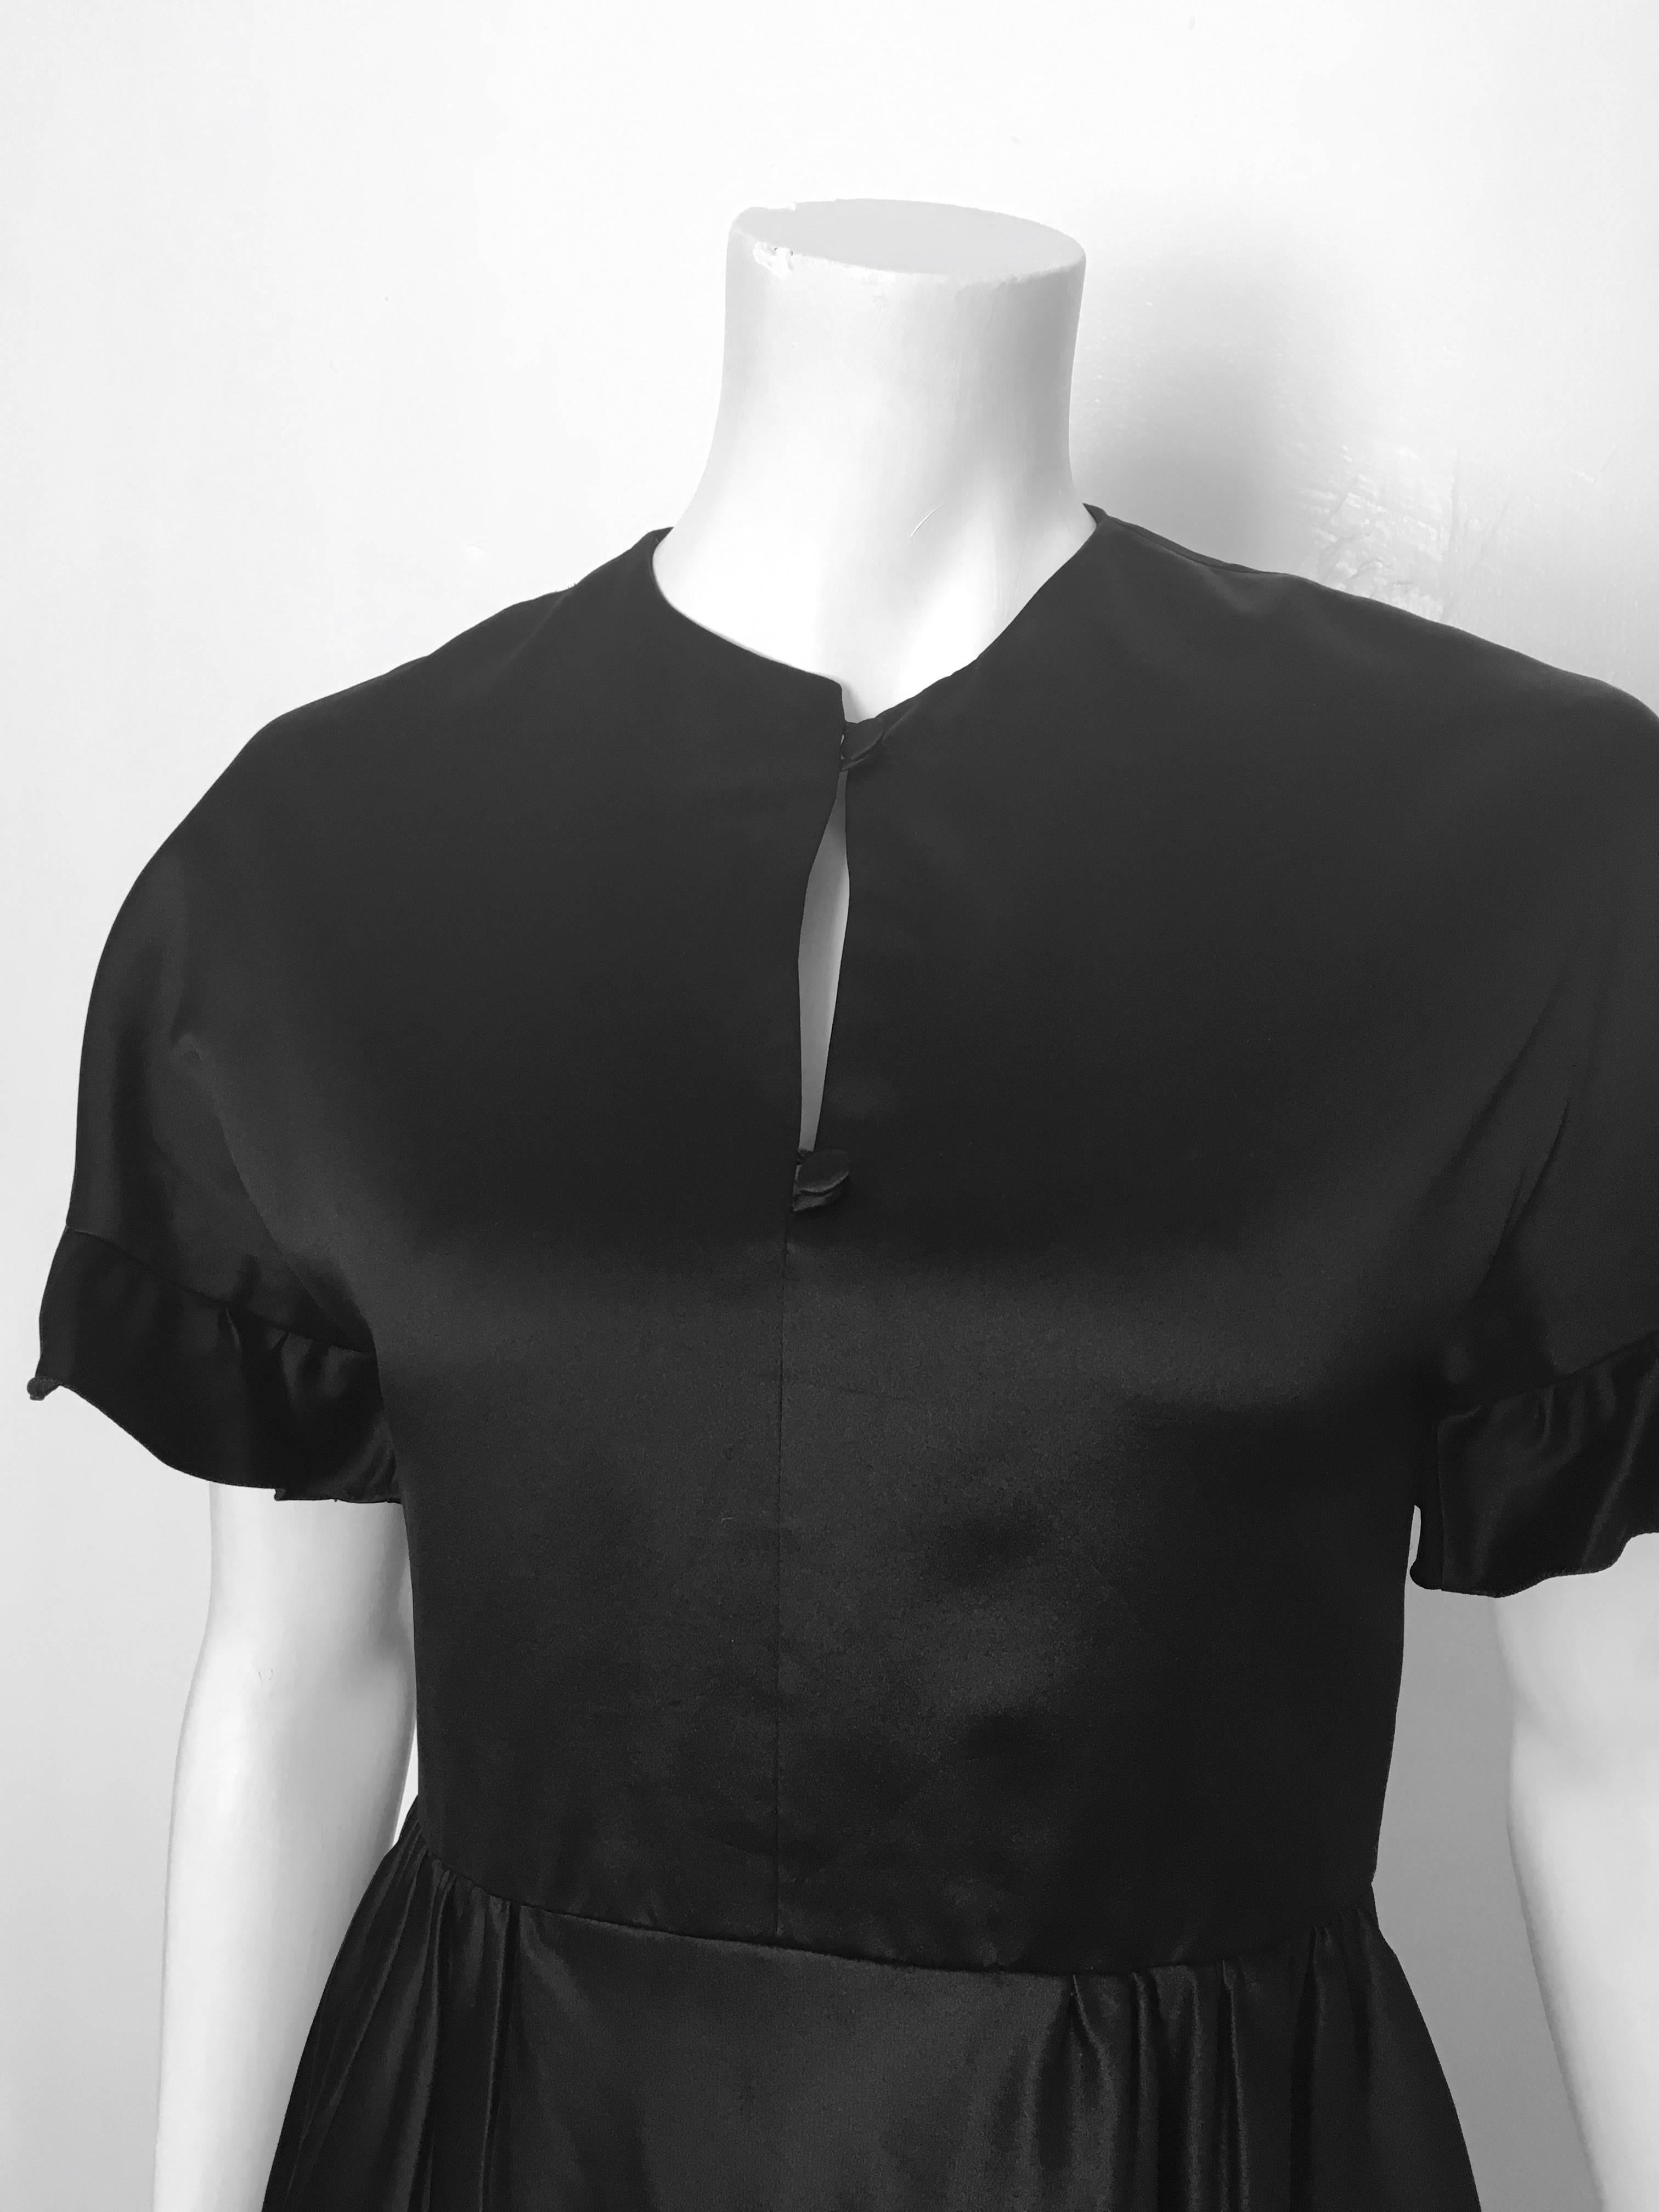 Valentino 60s Black Silk Cocktail Dress With Pockets Size 4. 2